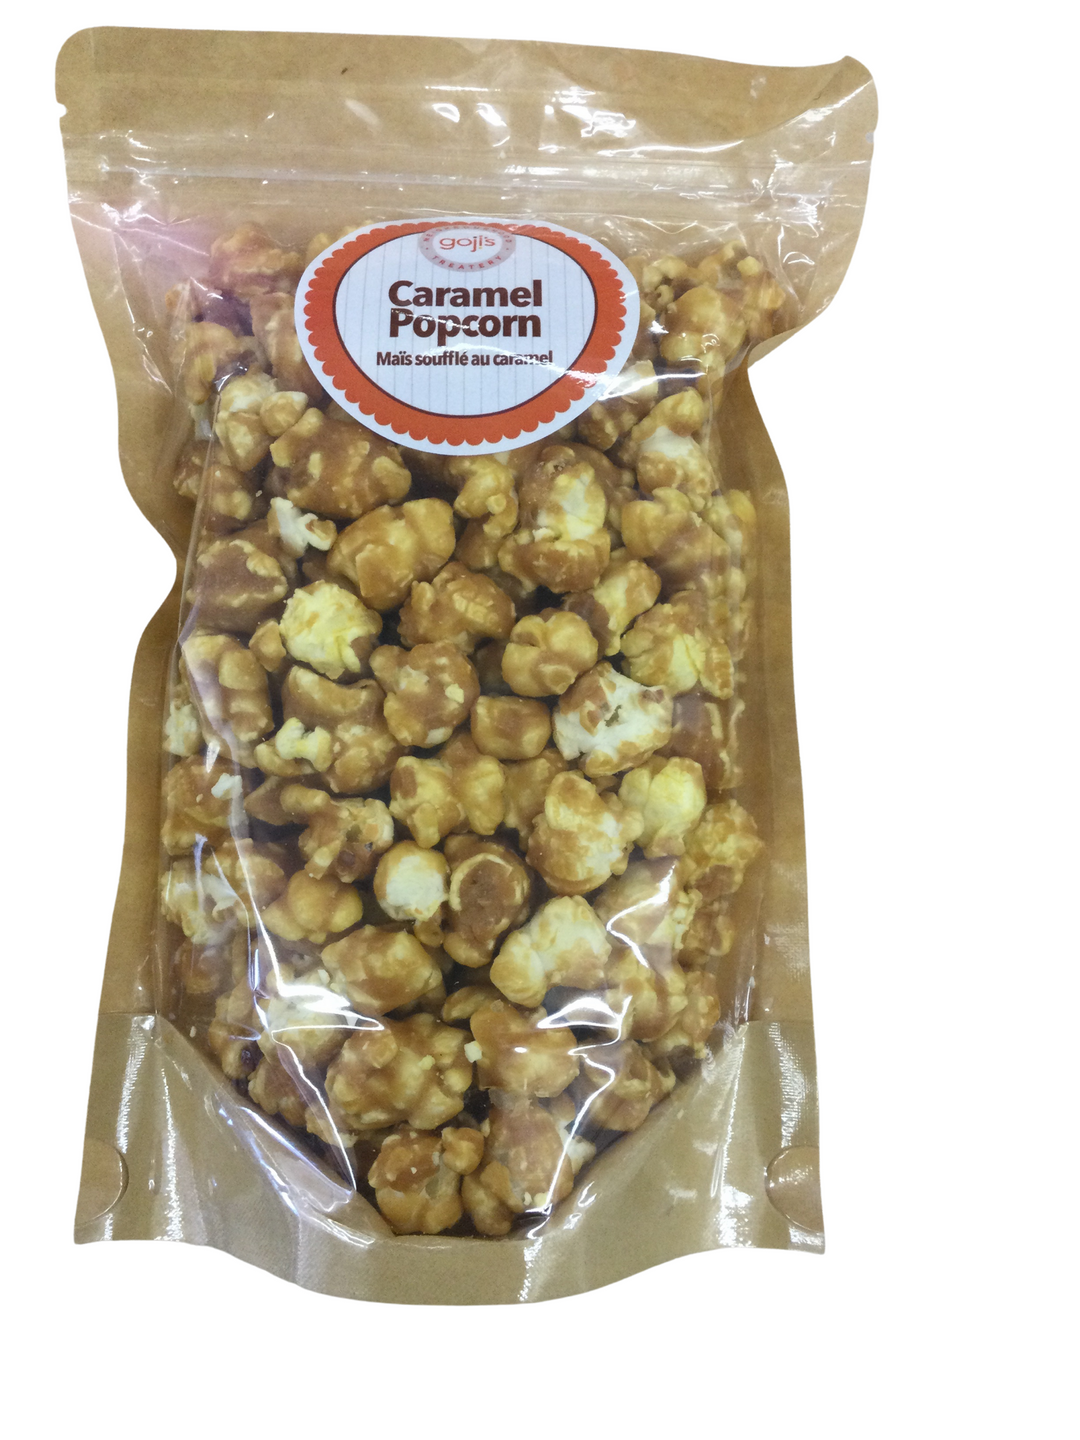 Goji’s Caramel Popcorn